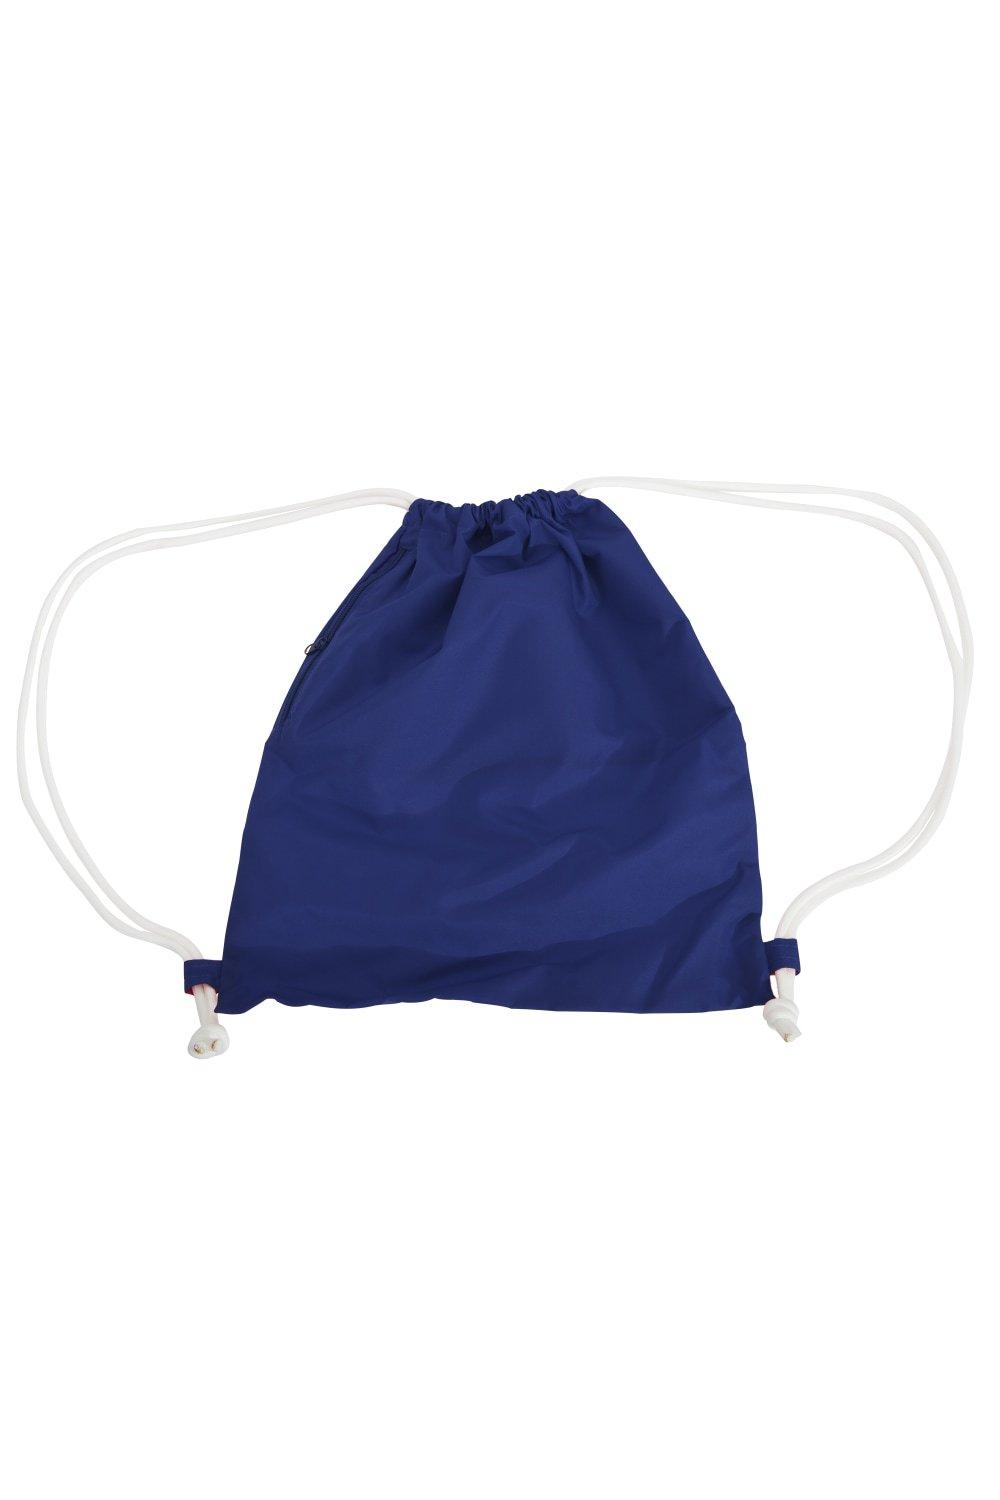 Сумка Icon на шнурке / Gymsac Bagbase, темно-синий сумка urban gymsac на шнурке sol s темно синий